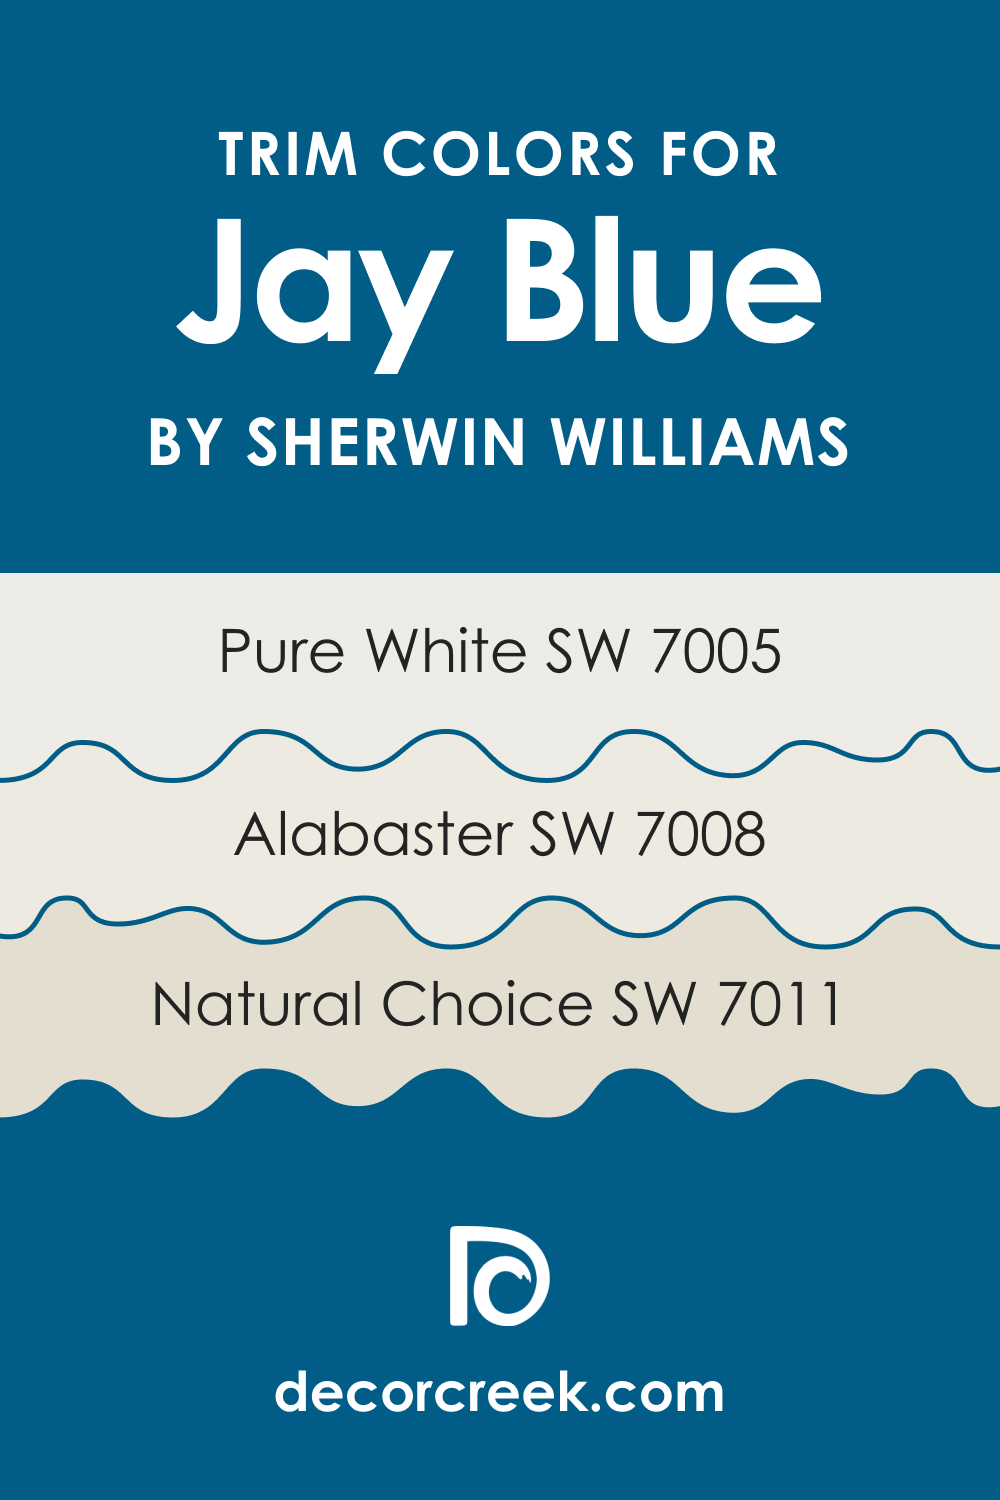 Trim Colors of SW 6797 Jay Blue